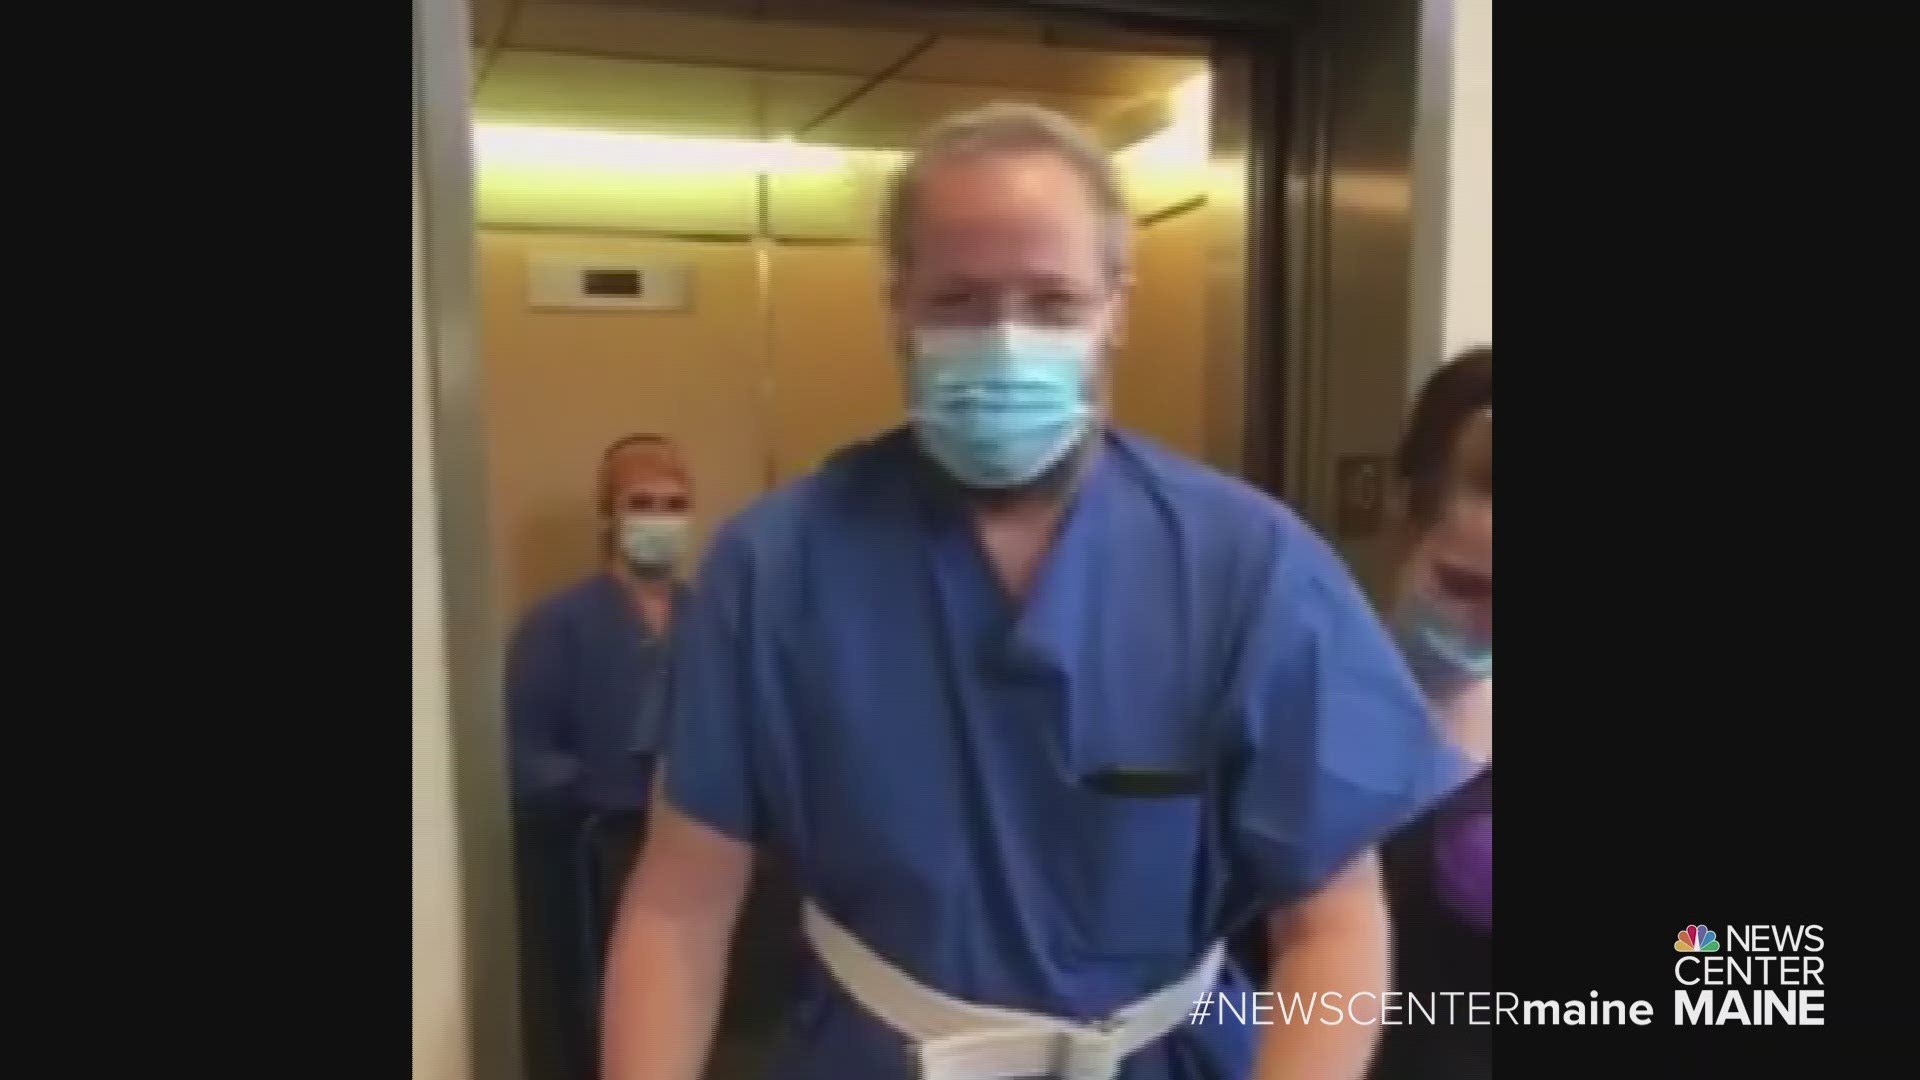 Richard Stephenson walks out of the hospital